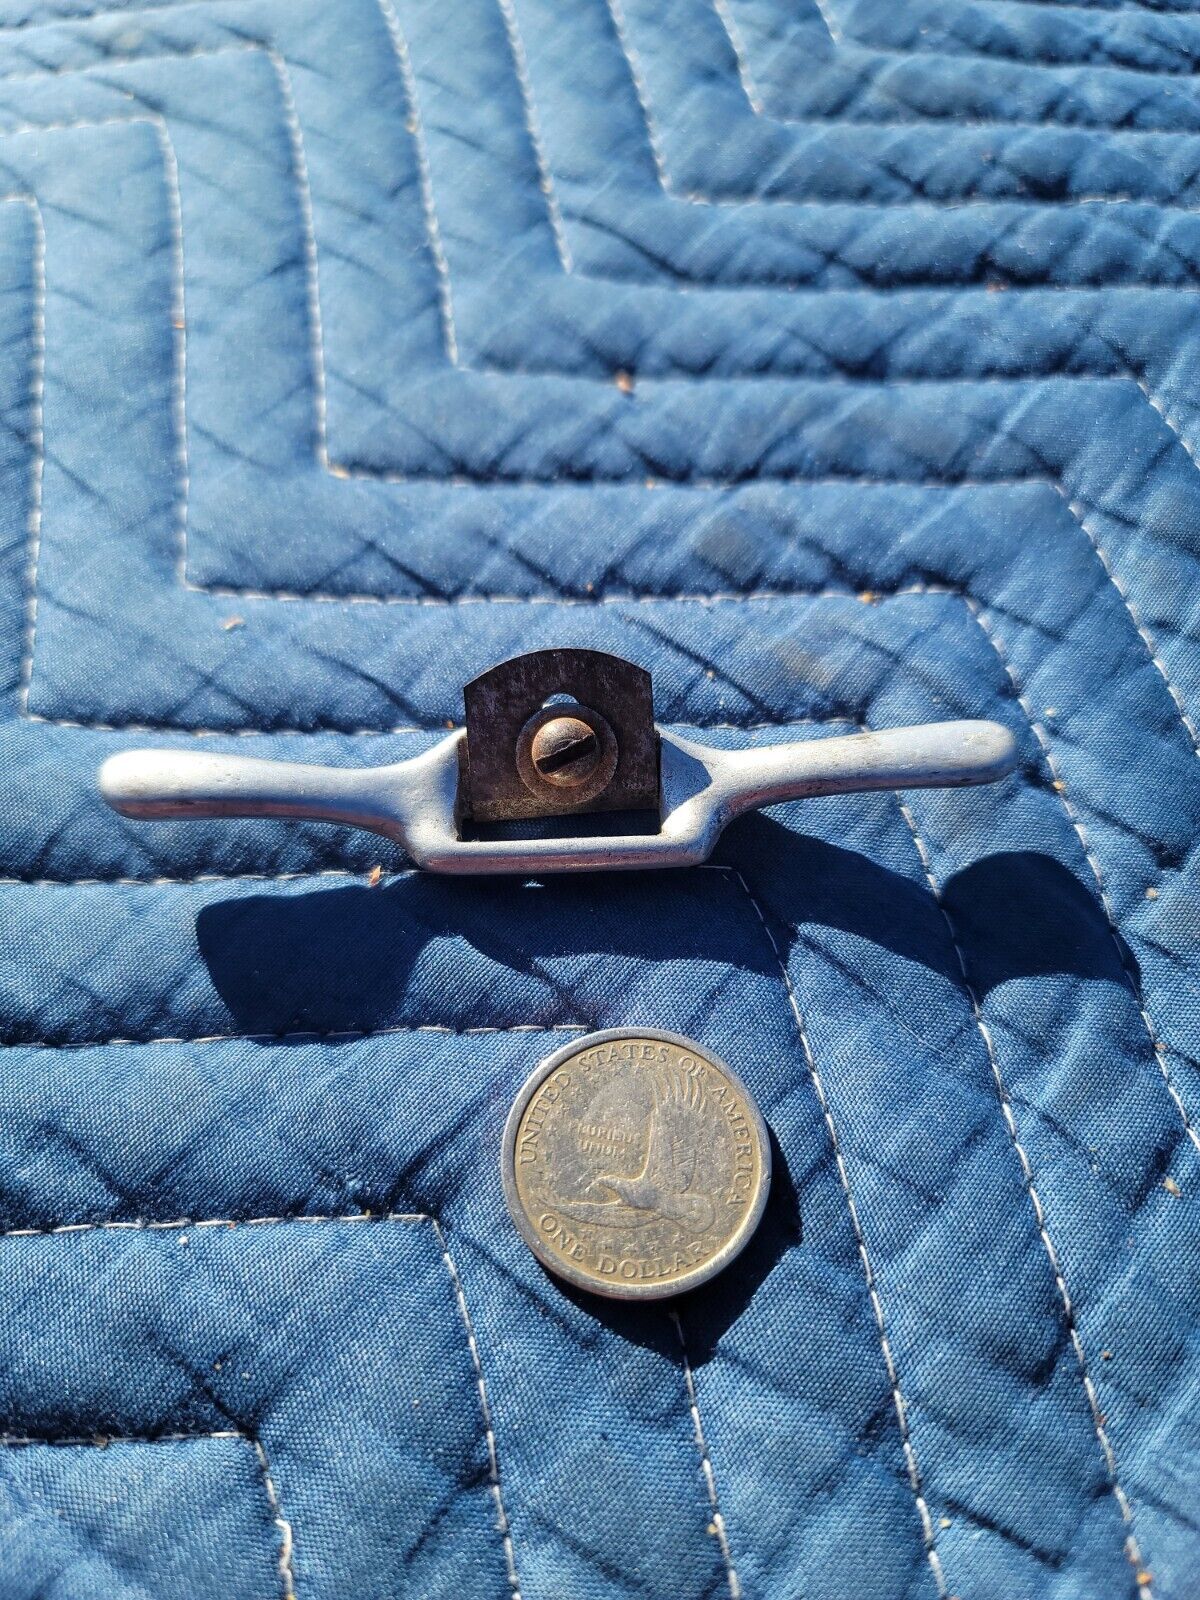 Neat Old Miniature Spokeshave☆Tiny Salesman Sample Size Carpenter's Tool